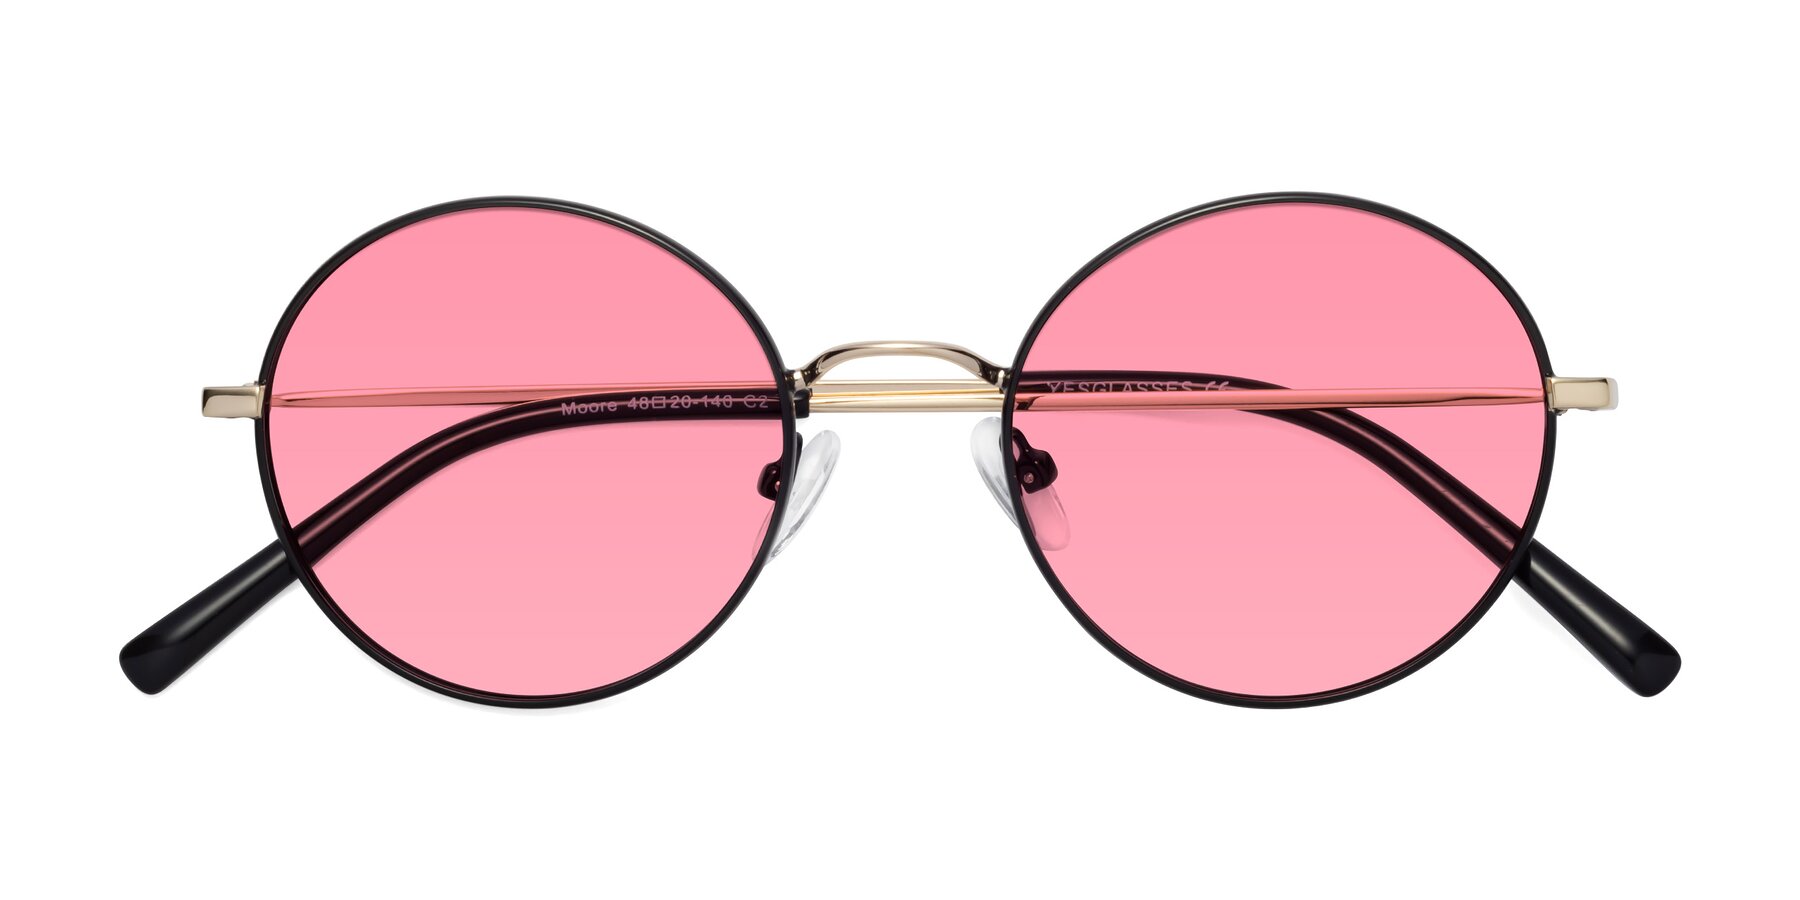 raket Indvandring Brudgom Black-Gold Retro-Vintage Metal Round Tinted Sunglasses with Pink Sunwear  Lenses - Moore